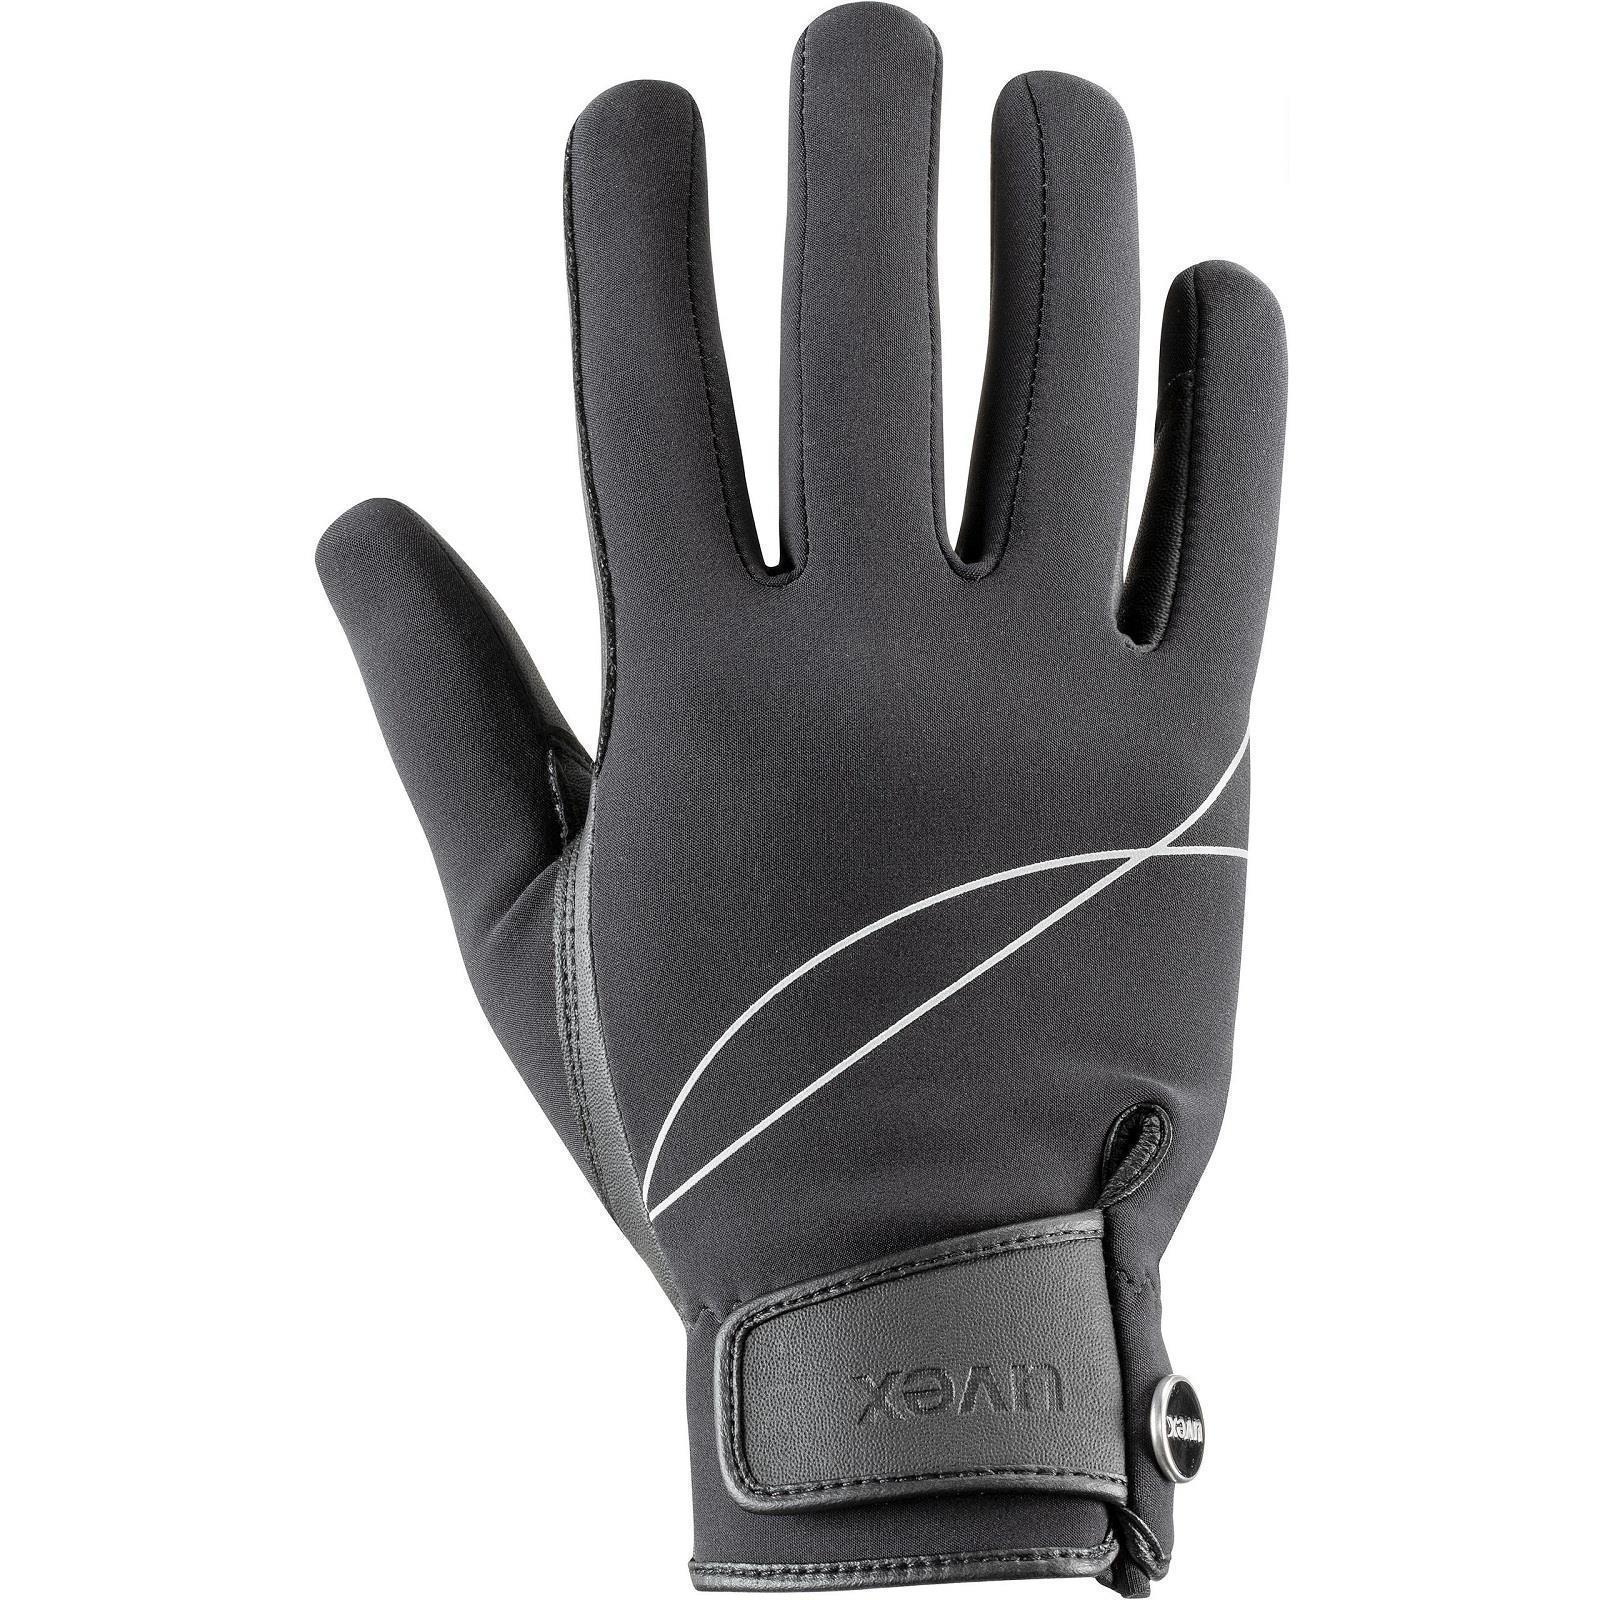 Uvex Winter Riding Gloves crx700 6.5